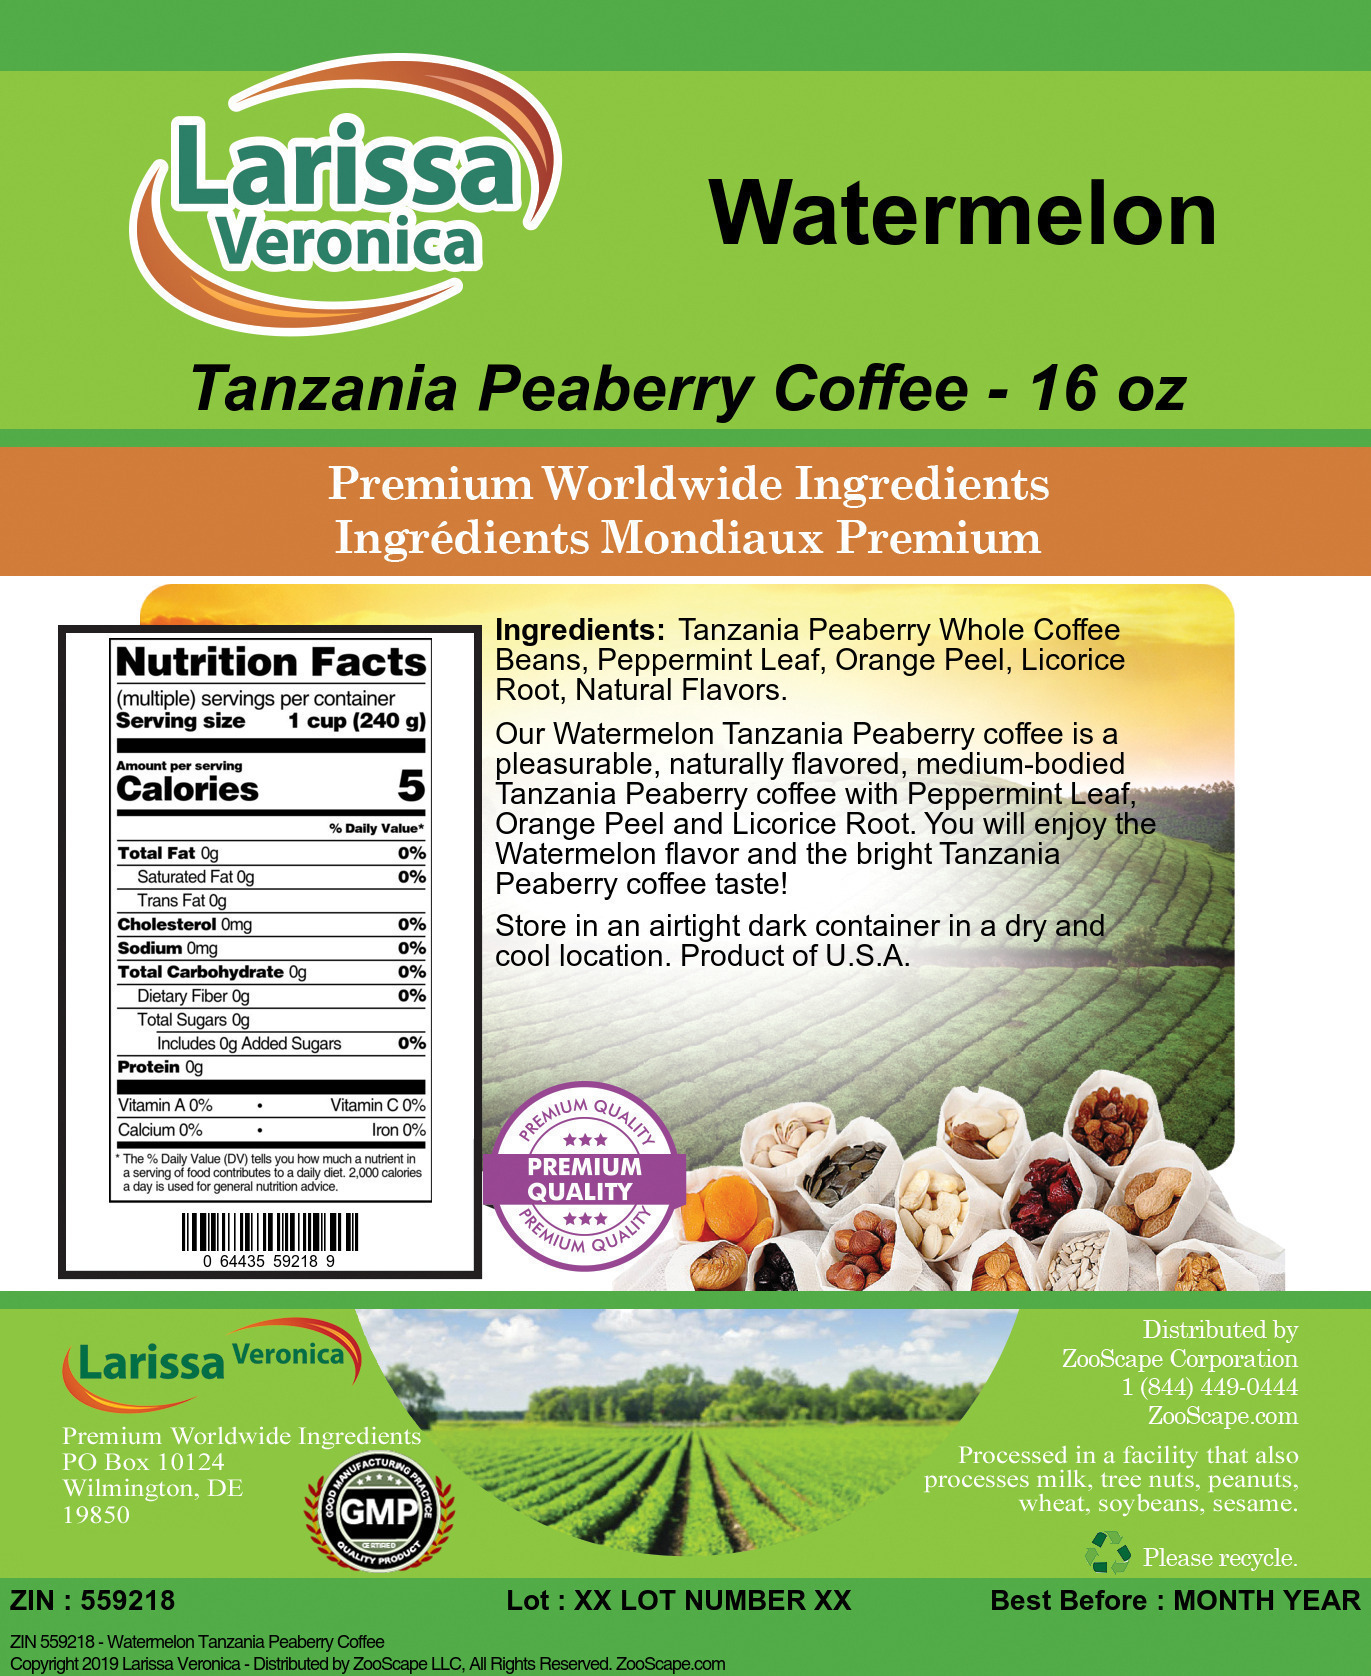 Watermelon Tanzania Peaberry Coffee - Label